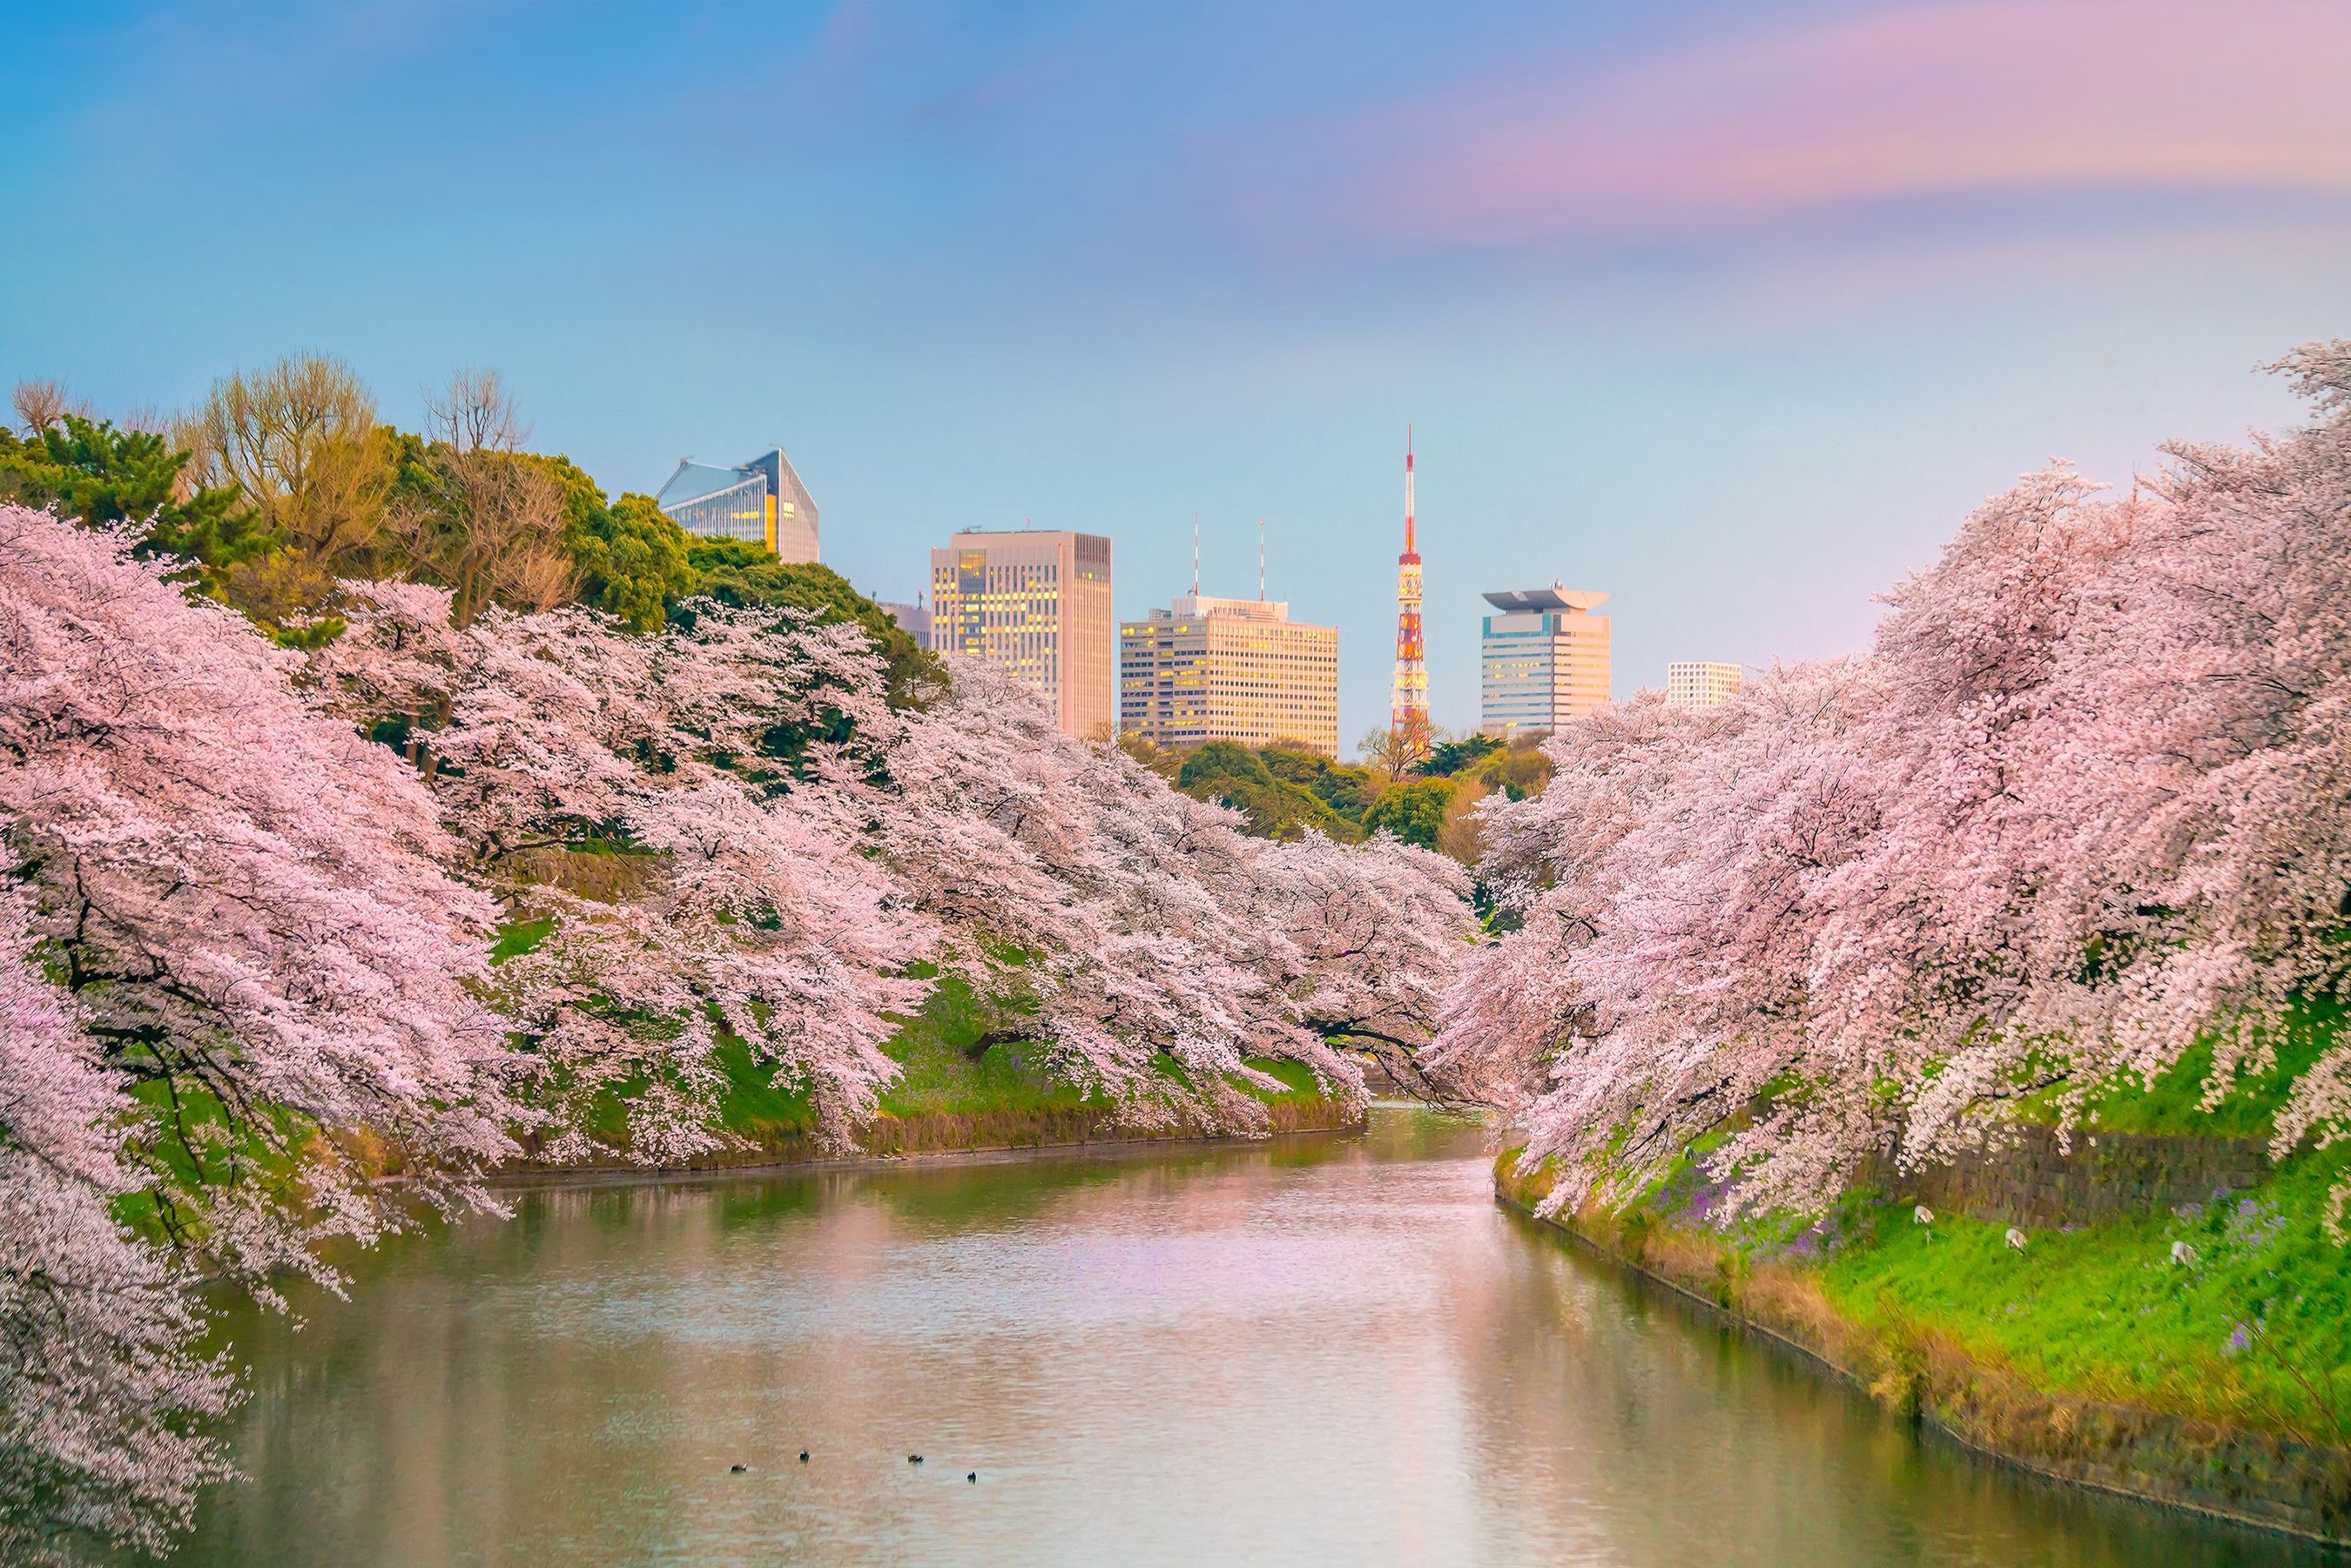 Япония пон. Чидоригафучи Токио. Парк тидоригафути (Чидоригафучи). Киото Япония цветение Сакуры. Японский парк Чидоригафучи.